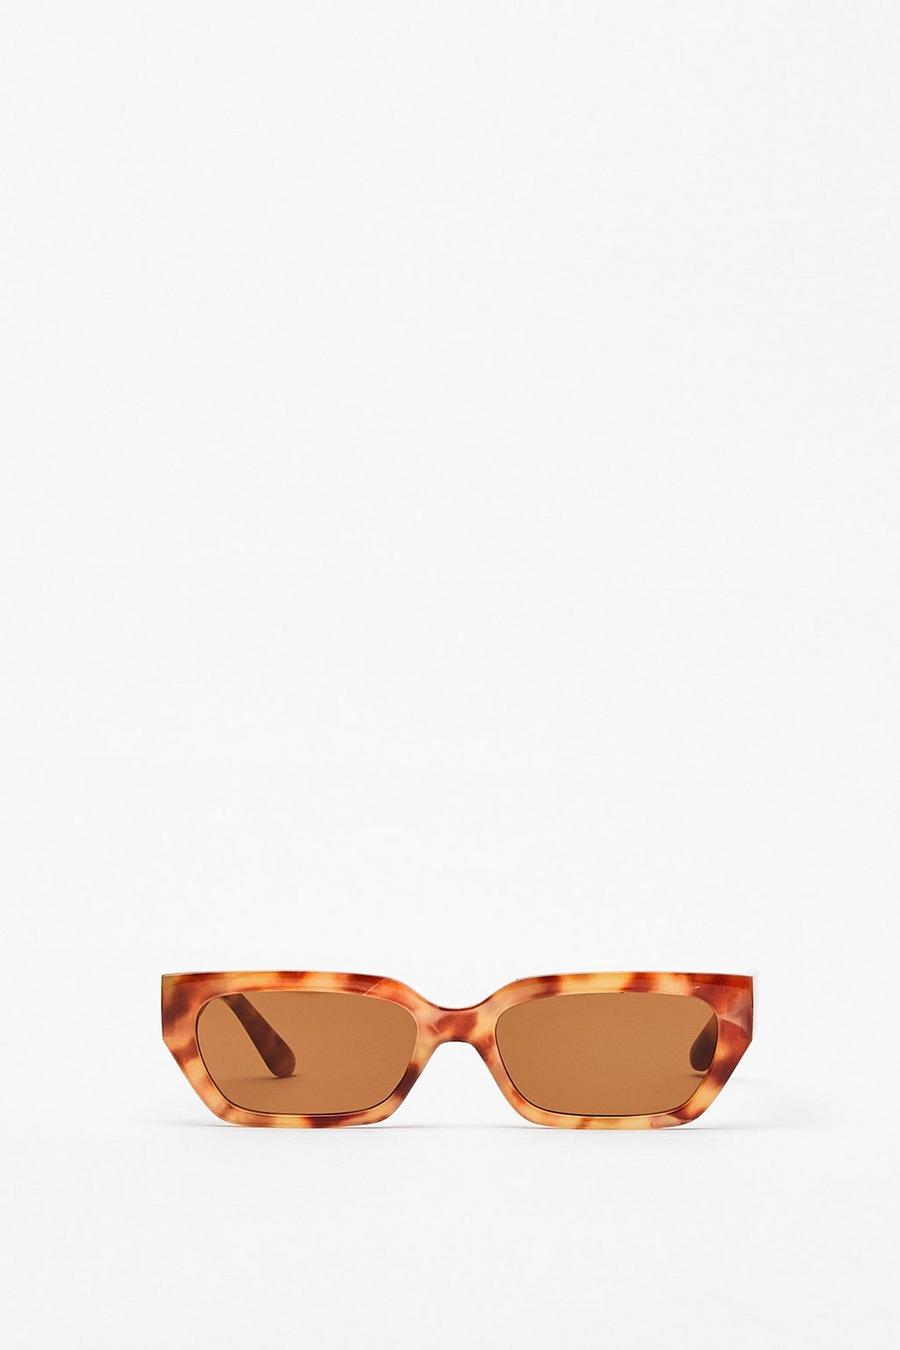 Natural beige Tortoiseshell Slim Rectangle Frame Sunglasses